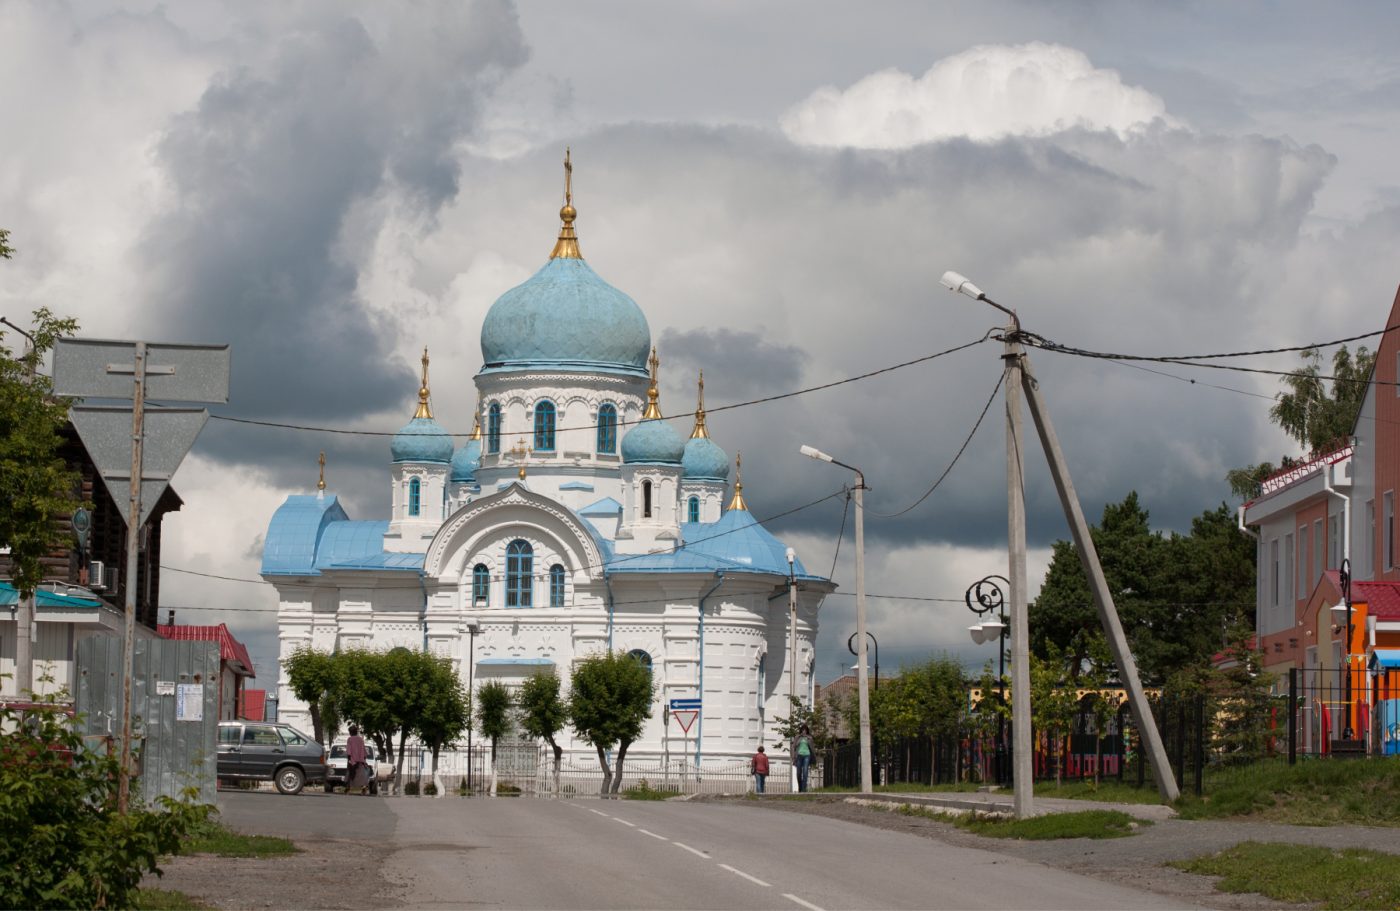 Photo: “Ishim, Tyumen Oblast, Russia” by Andrey Nagaycev under CC BY-SA 3.0.